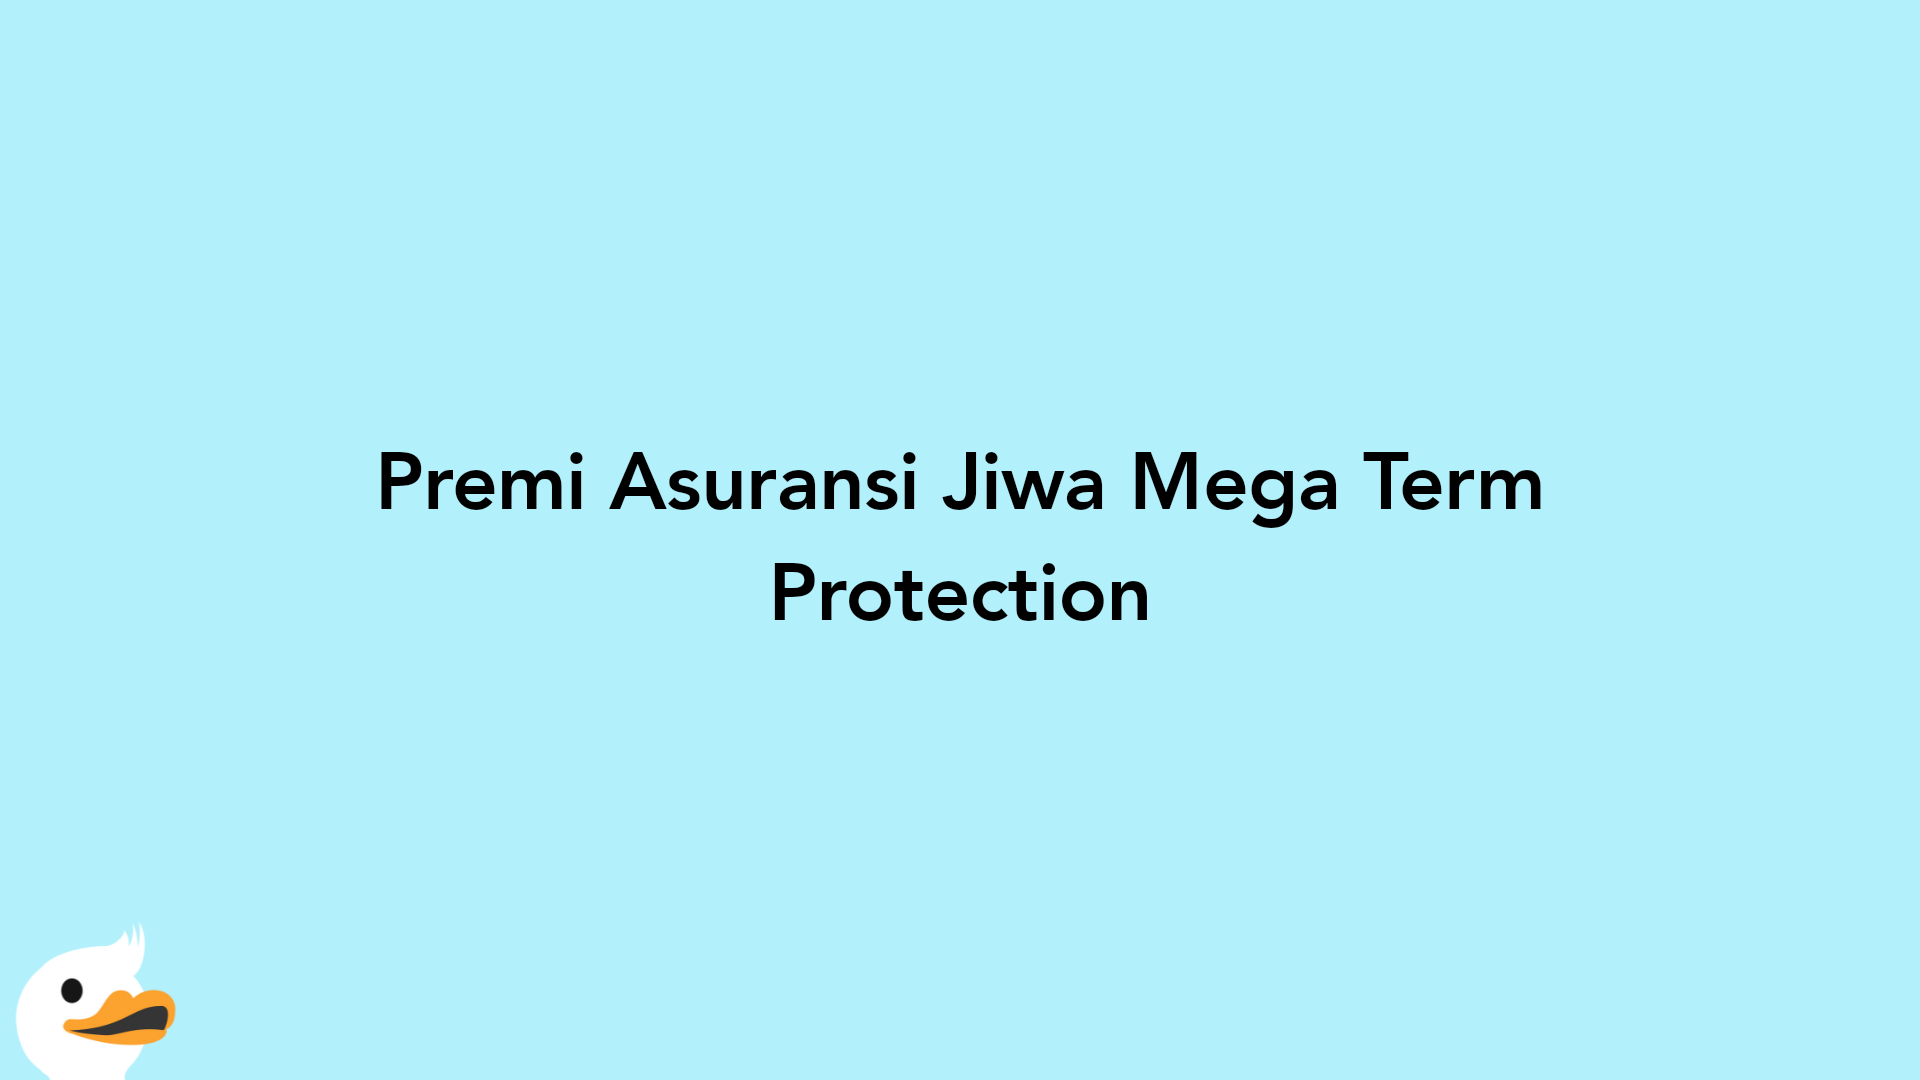 Premi Asuransi Jiwa Mega Term Protection